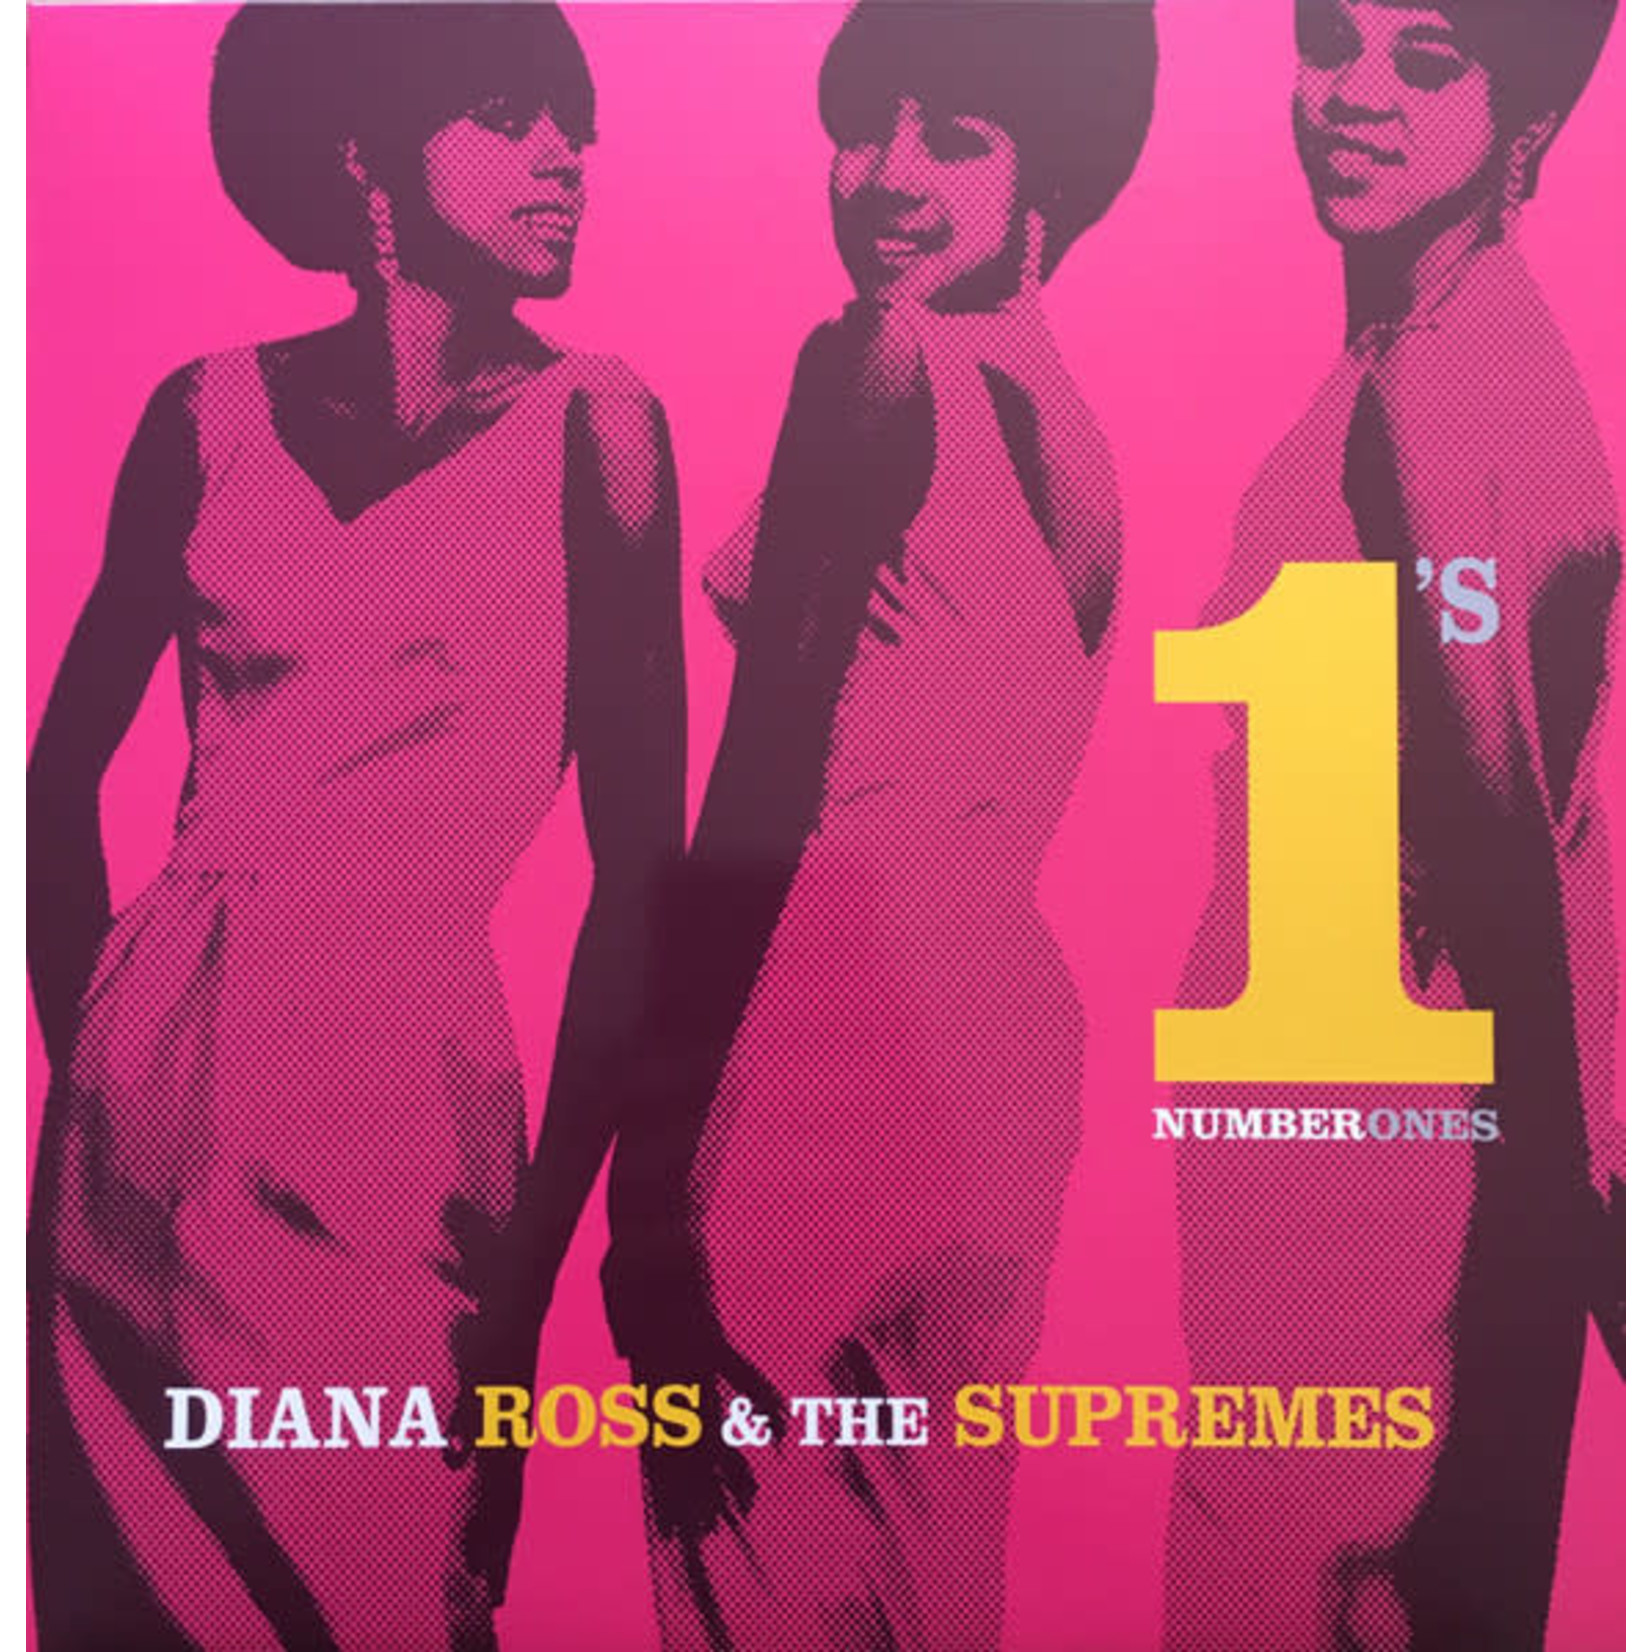 Ross, Diana & The Supremes: No.1's (2LP, 180 gram audiophile vinyl) [MUSIC ON VINYL]